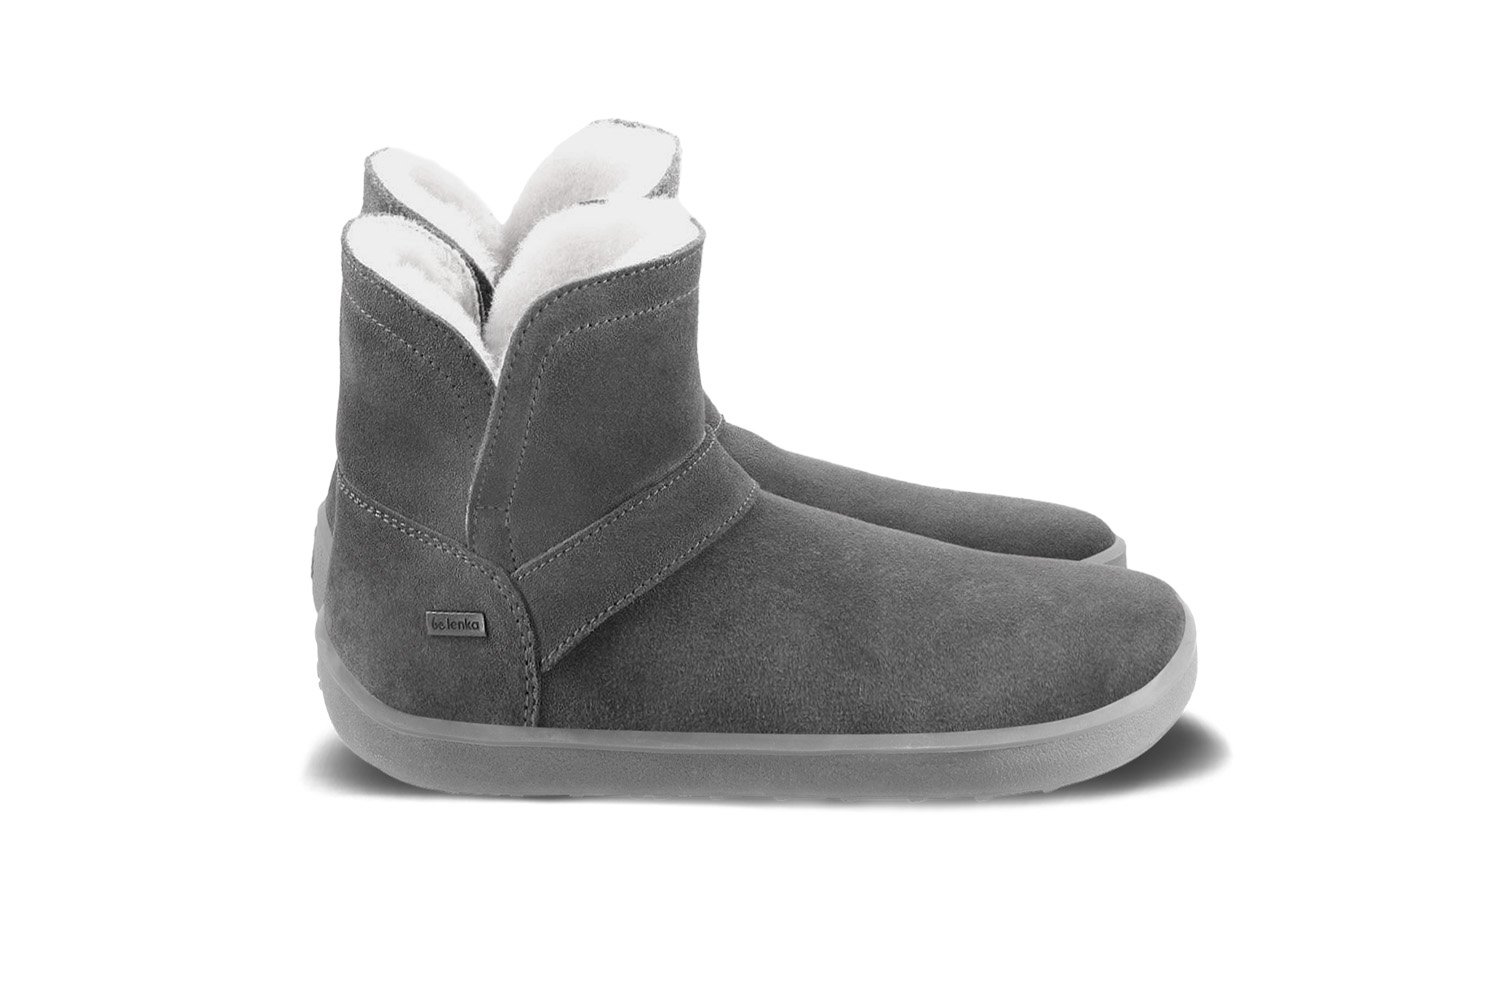 Barefoot zapatillas de niños Be Lenka Fluid - Blue & Grey – Aister